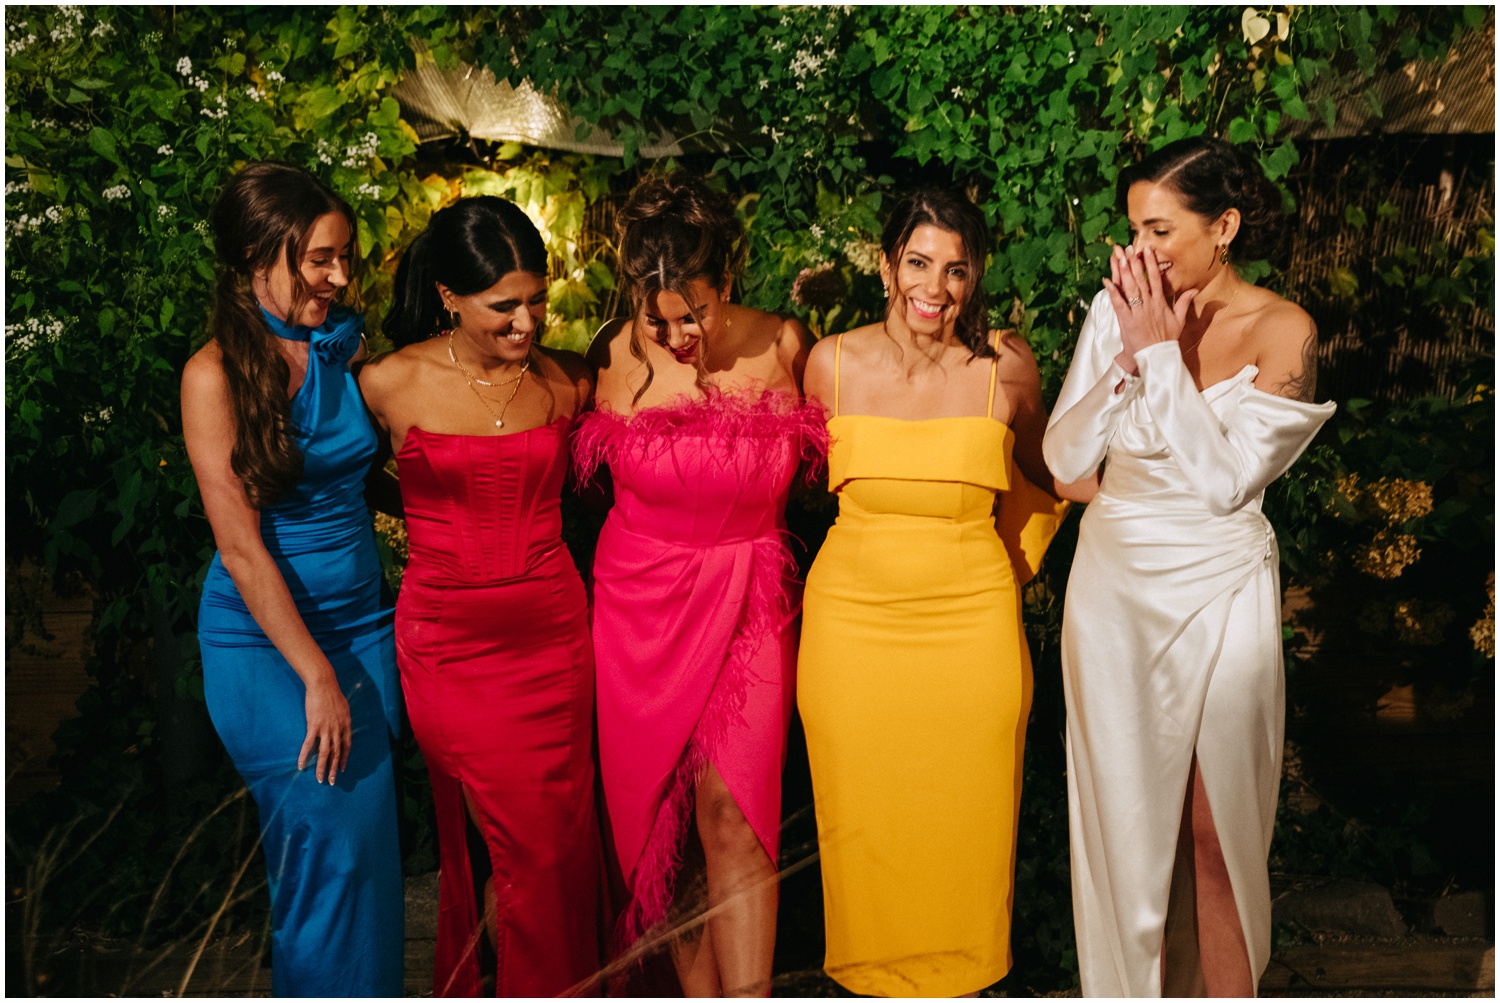 The bride admires her bridesmaids colorful dresses.